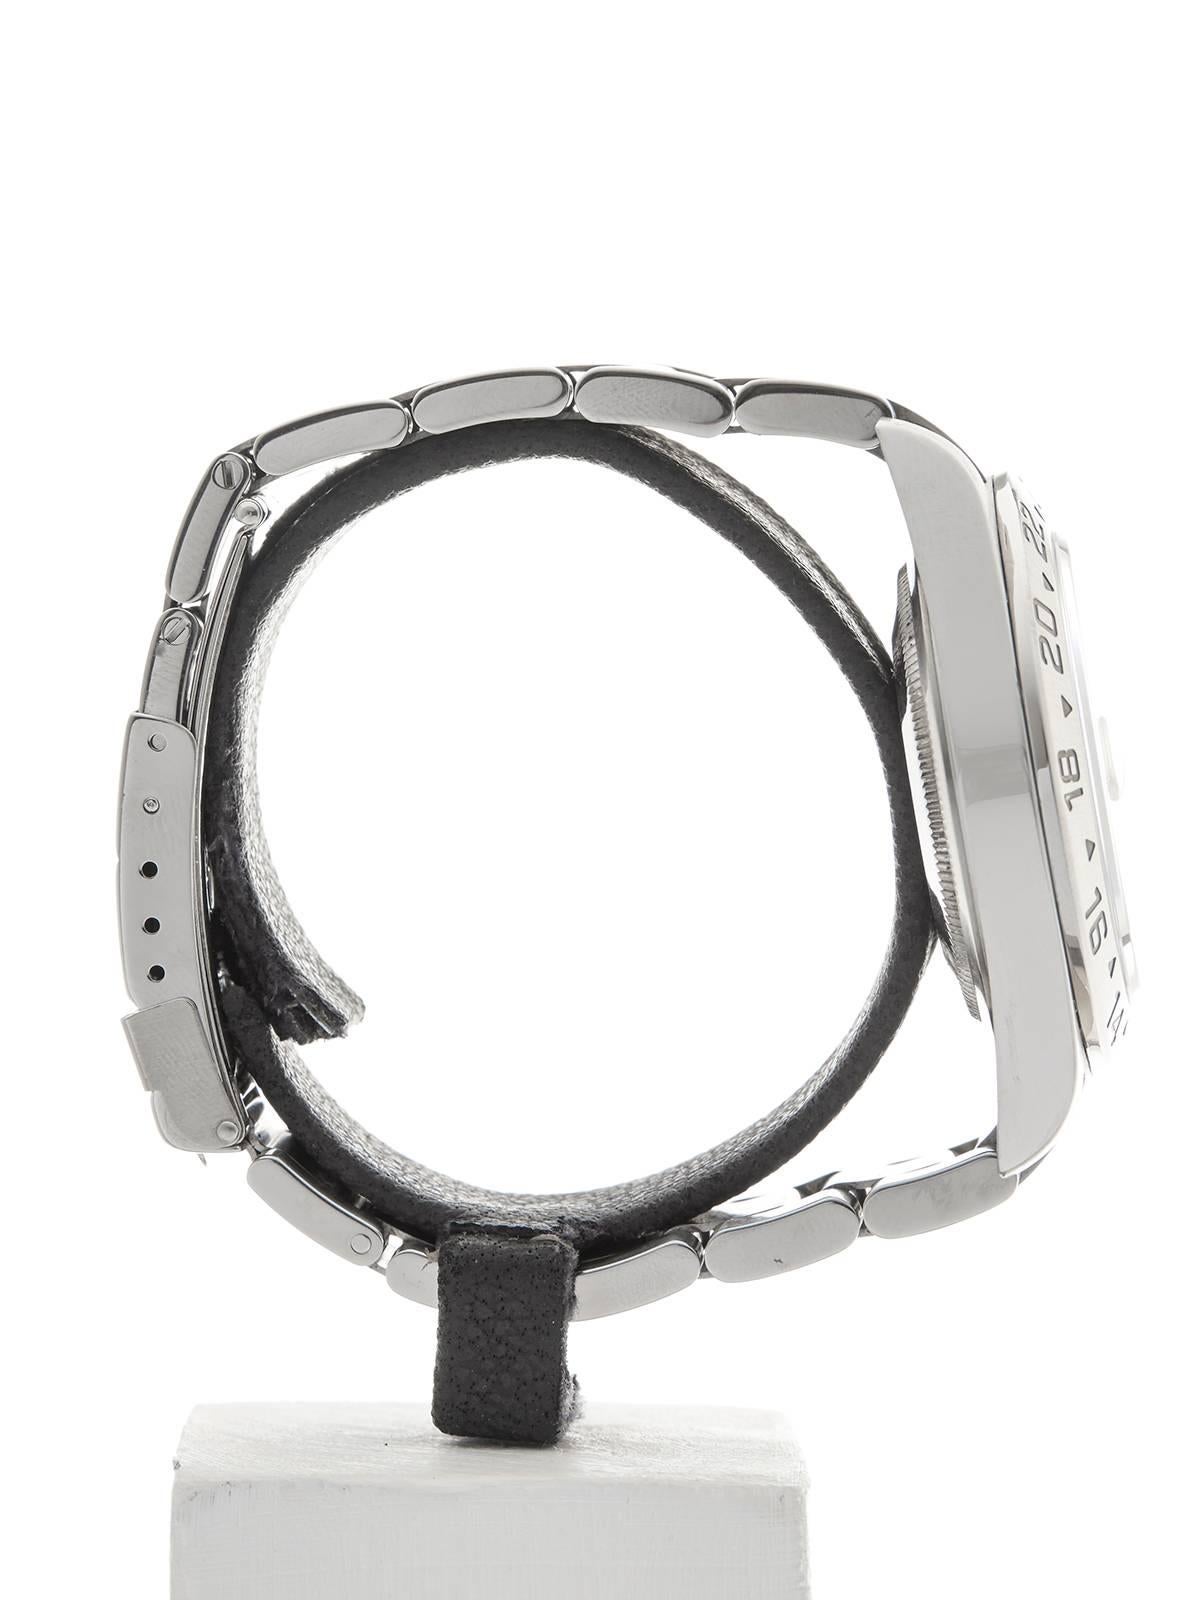 Rolex Stainless Steel Explorer II Polar Automatic Wristwatch 16570 2